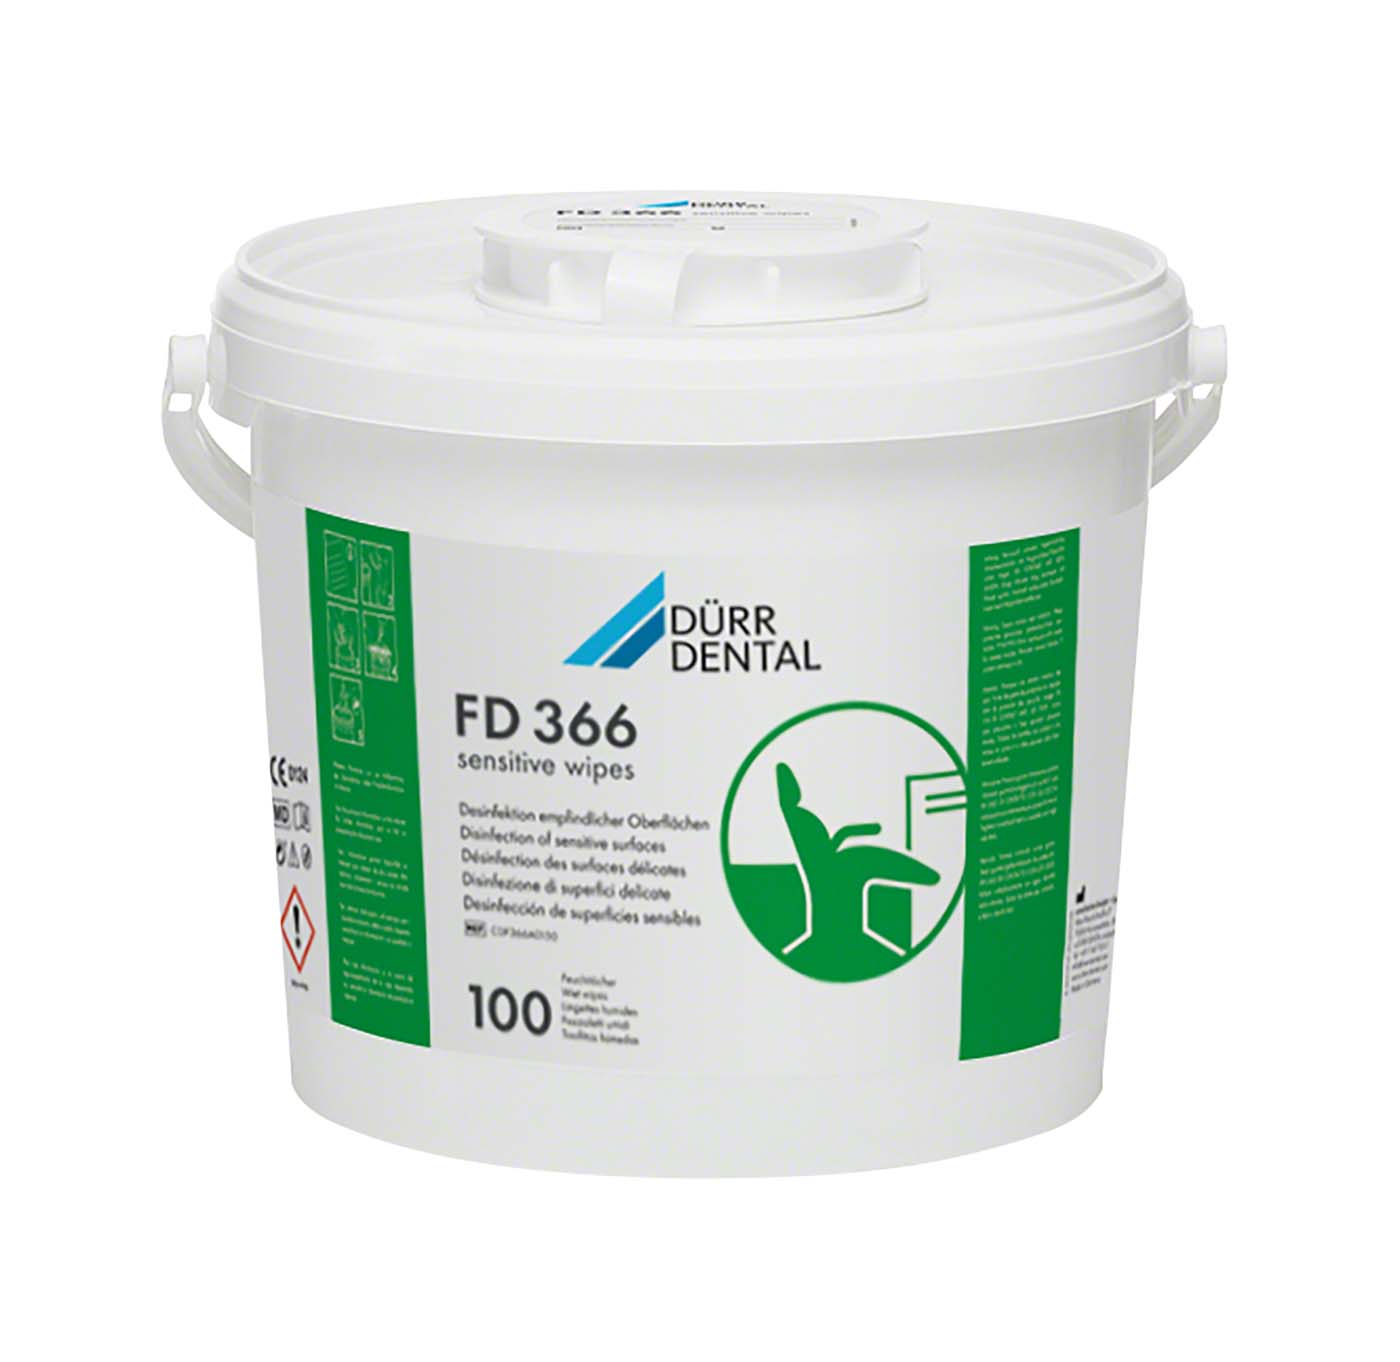 FD 366 sensitive wipes Dürr Dental